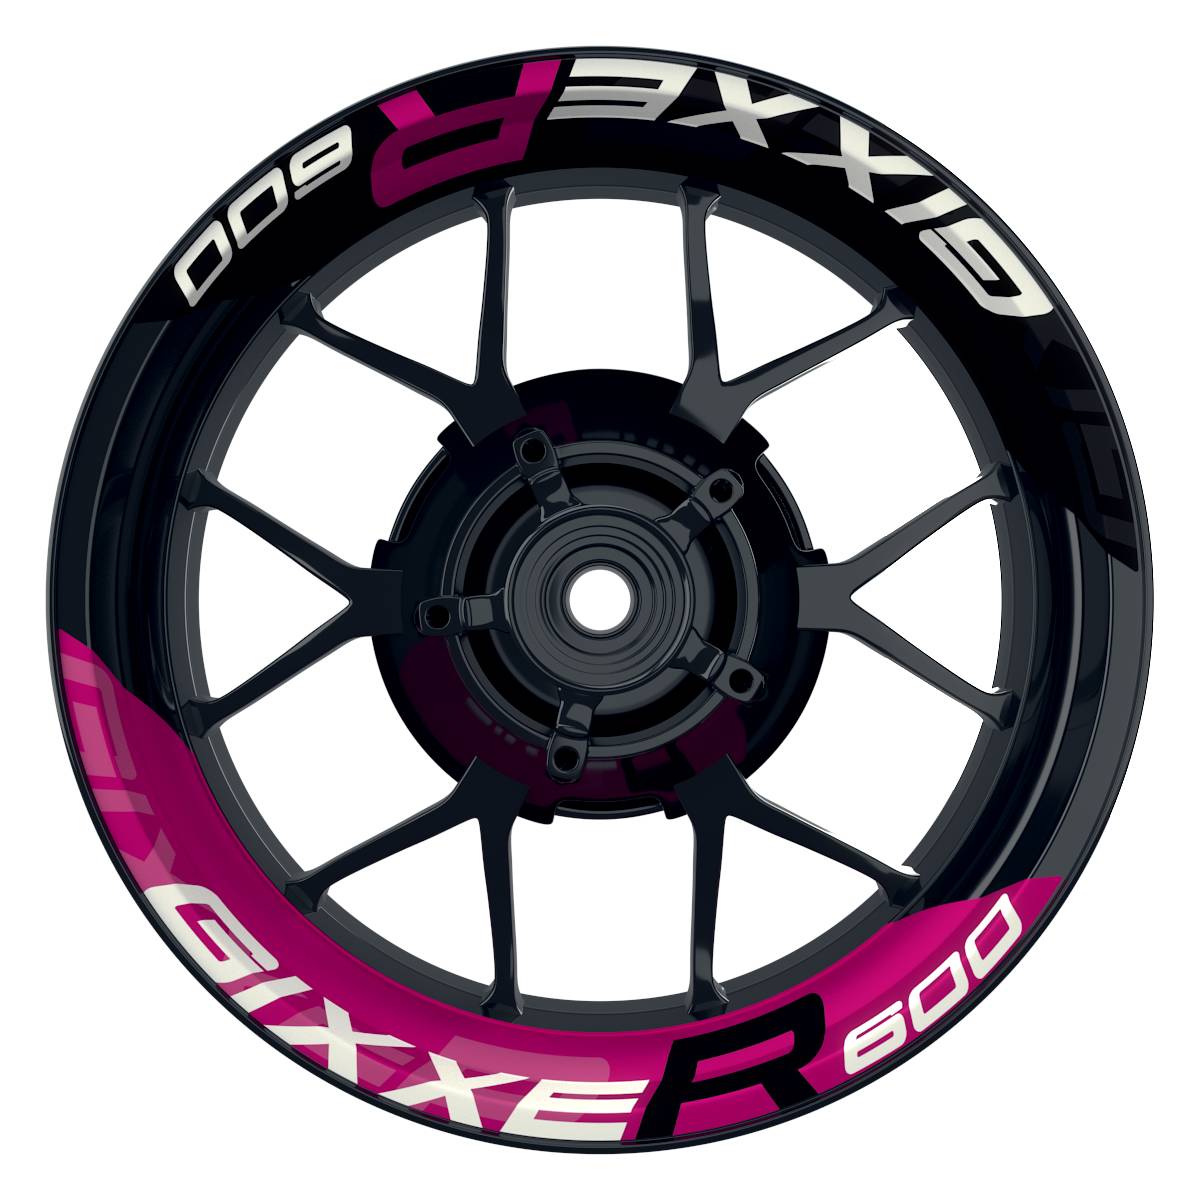 Wheelsticker Felgenaufkleber GIXXER600 halb halb V2 schwarz pink Frontansicht